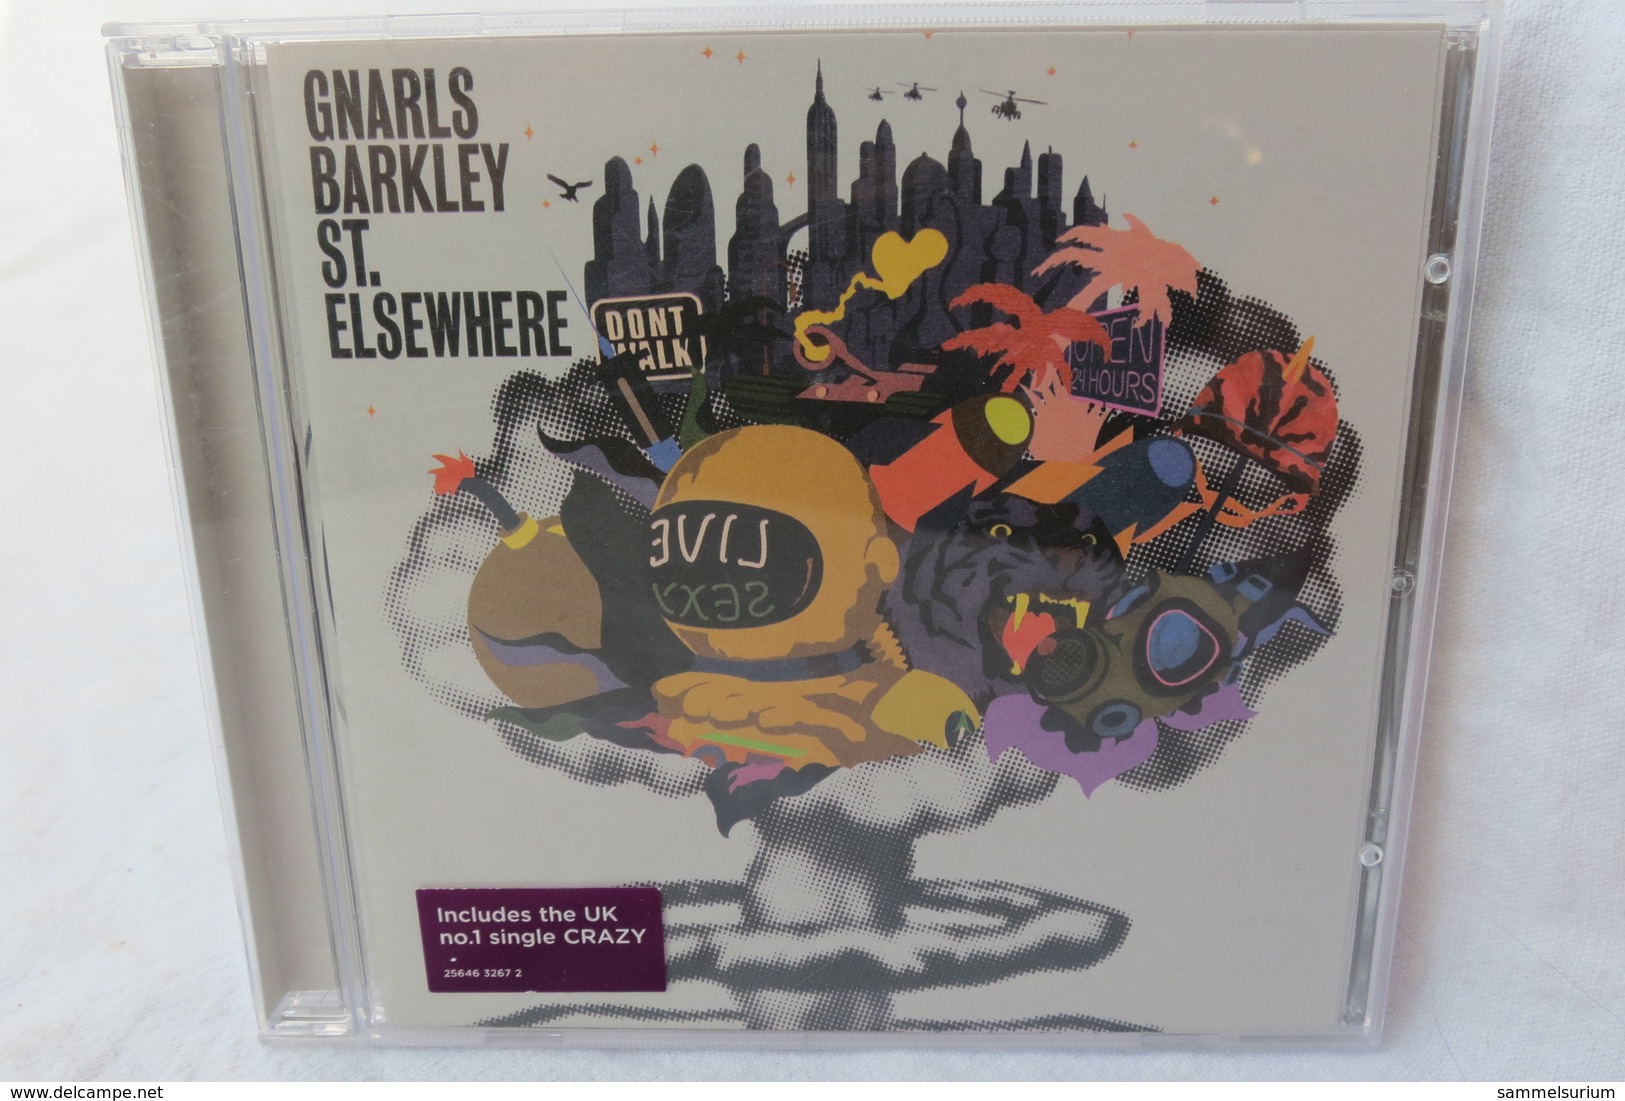 CD "Gnarls Barkley" St. Elsewhere - Dance, Techno & House